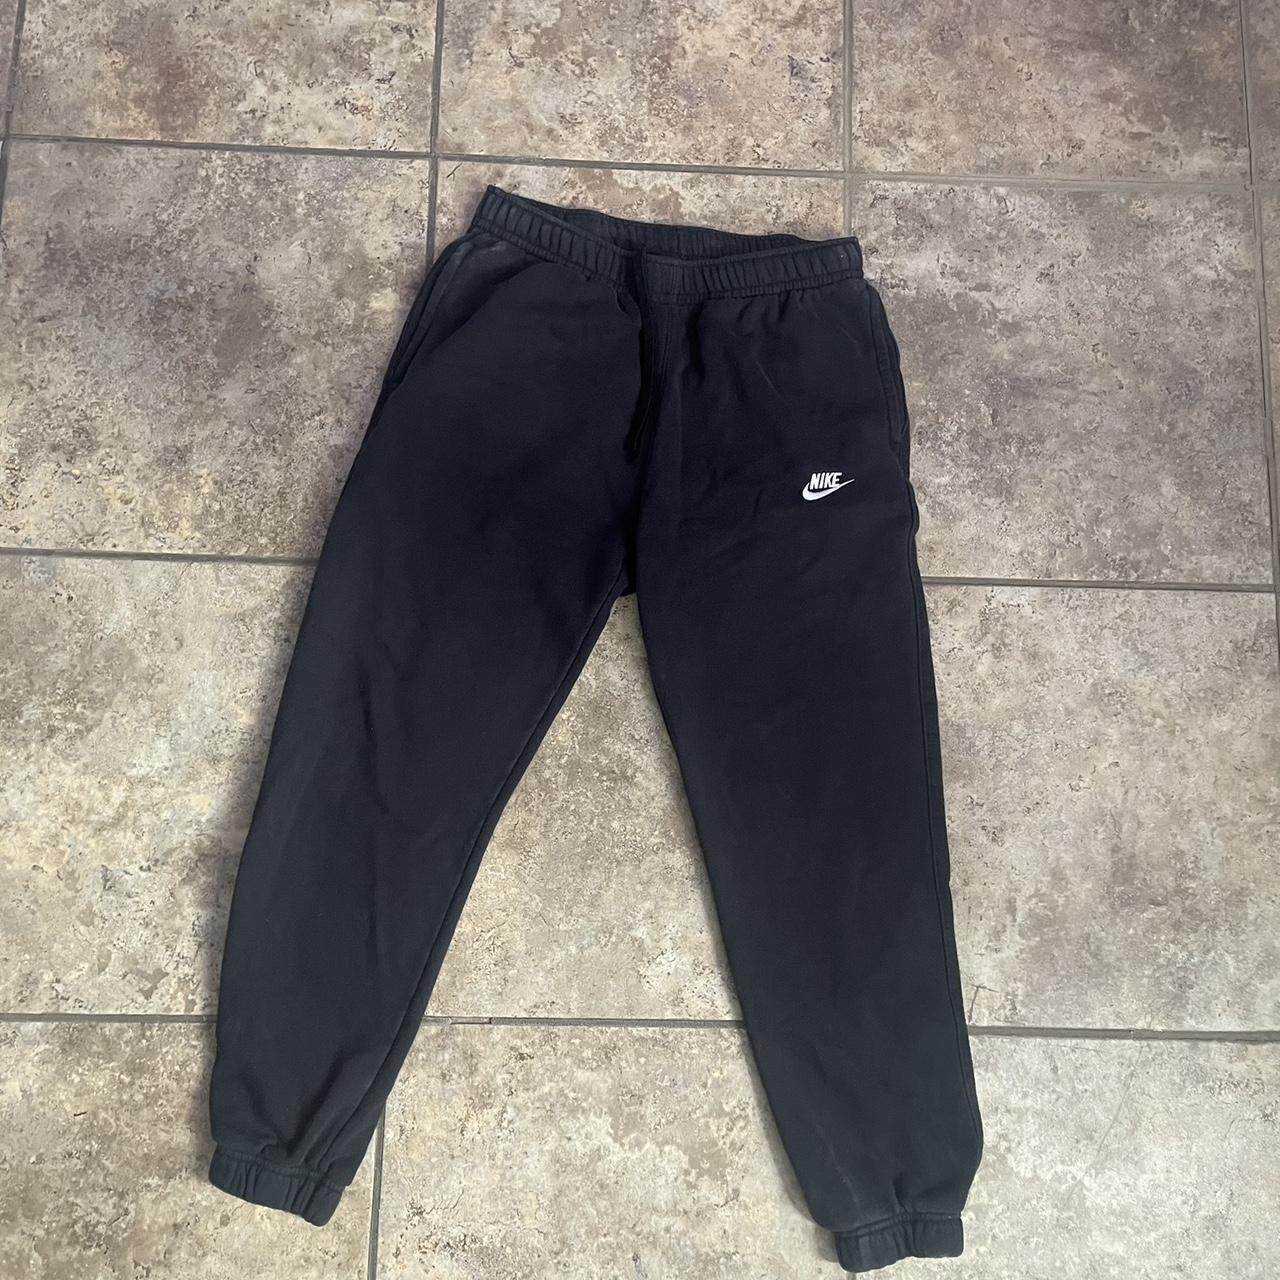 Nike sweatpants charcoal / black No flaws Size Large - Depop